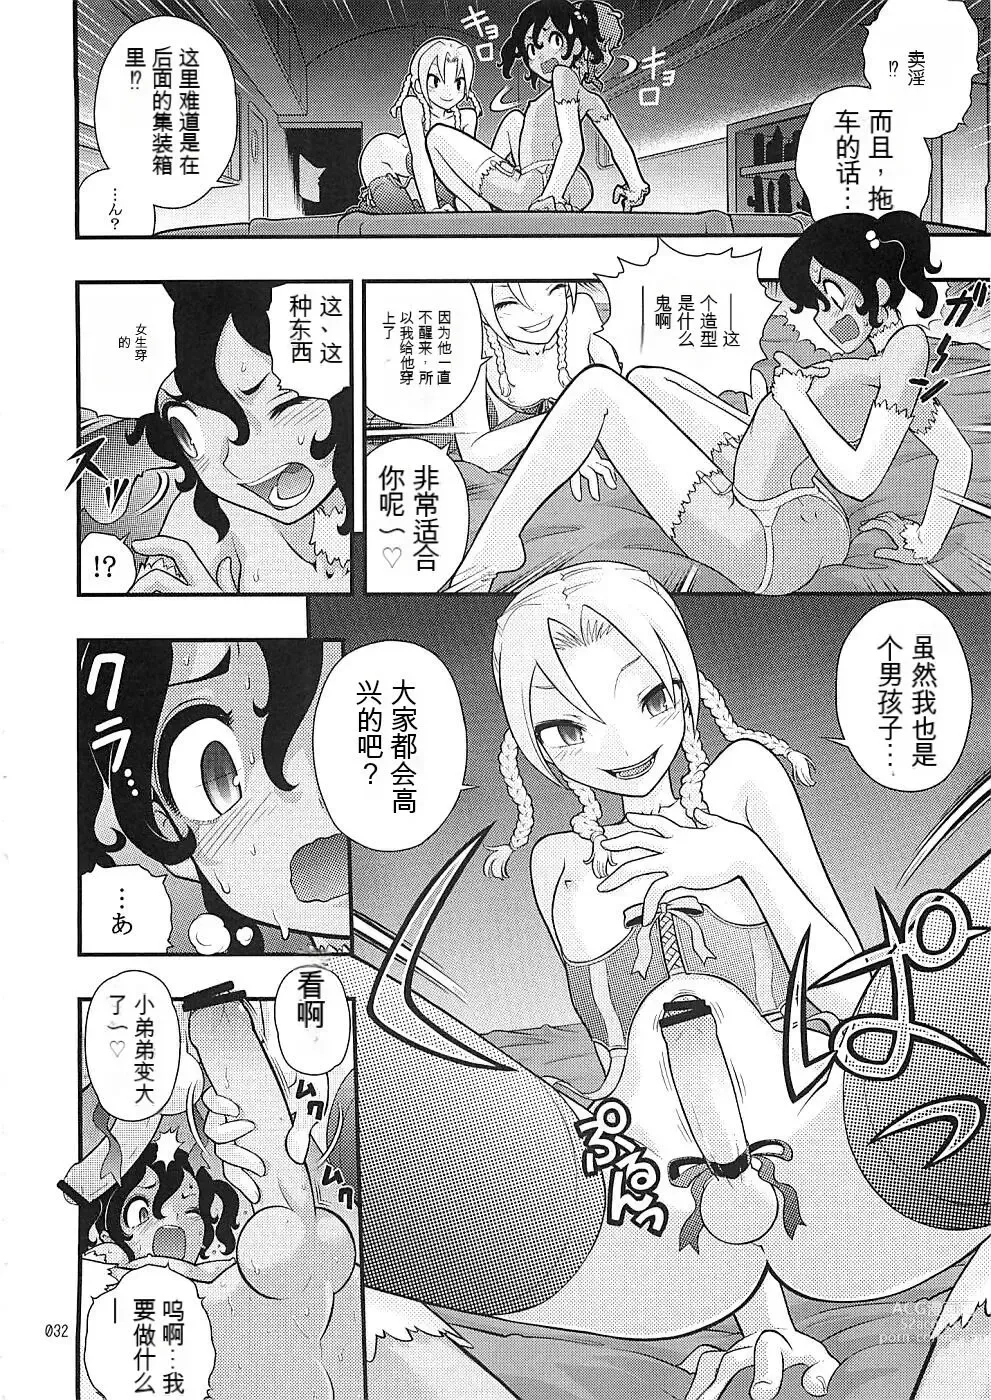 Page 4 of doujinshi Endless Summer Vacation